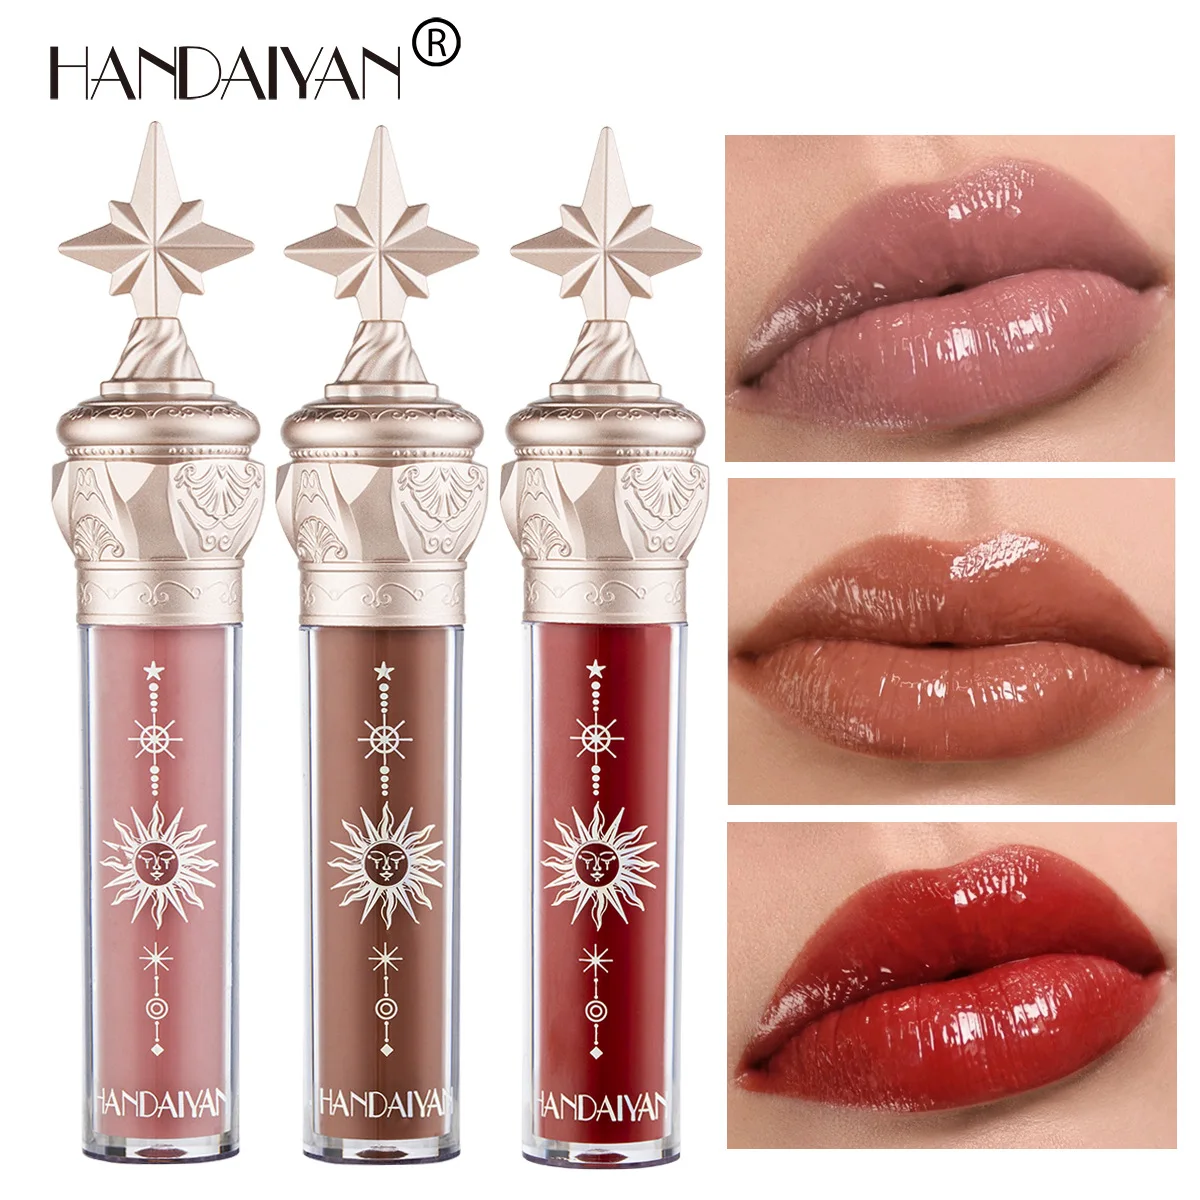 

HEALLOR Handaiyan 8 Colors Lip Gloss Longlasting Glitter Red Nude Lipstick Liquid Waterproof Moisturize Luminous Lipgloss Makeup